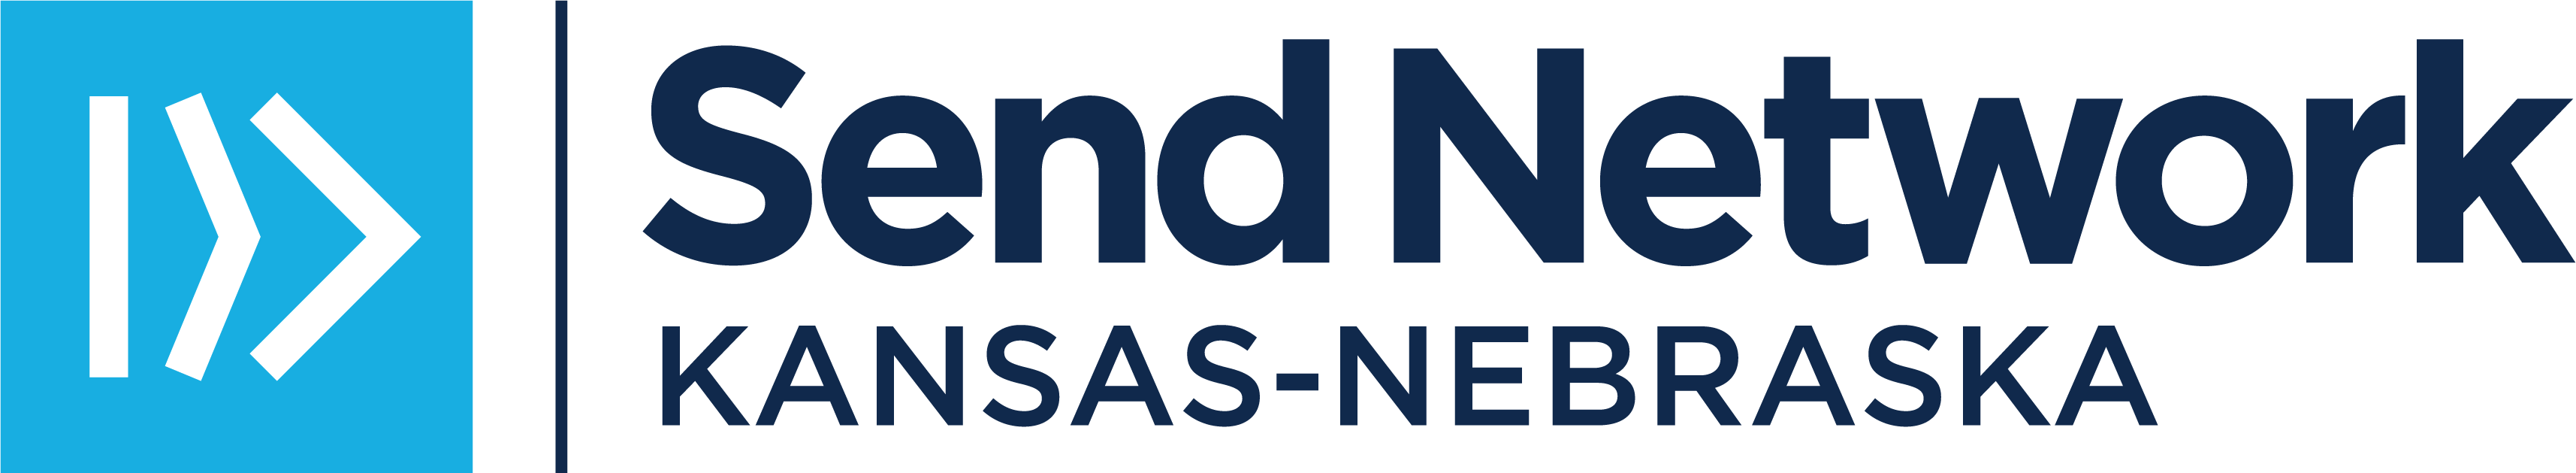 SN Kansas-Nebraska Logo_BlueNavy